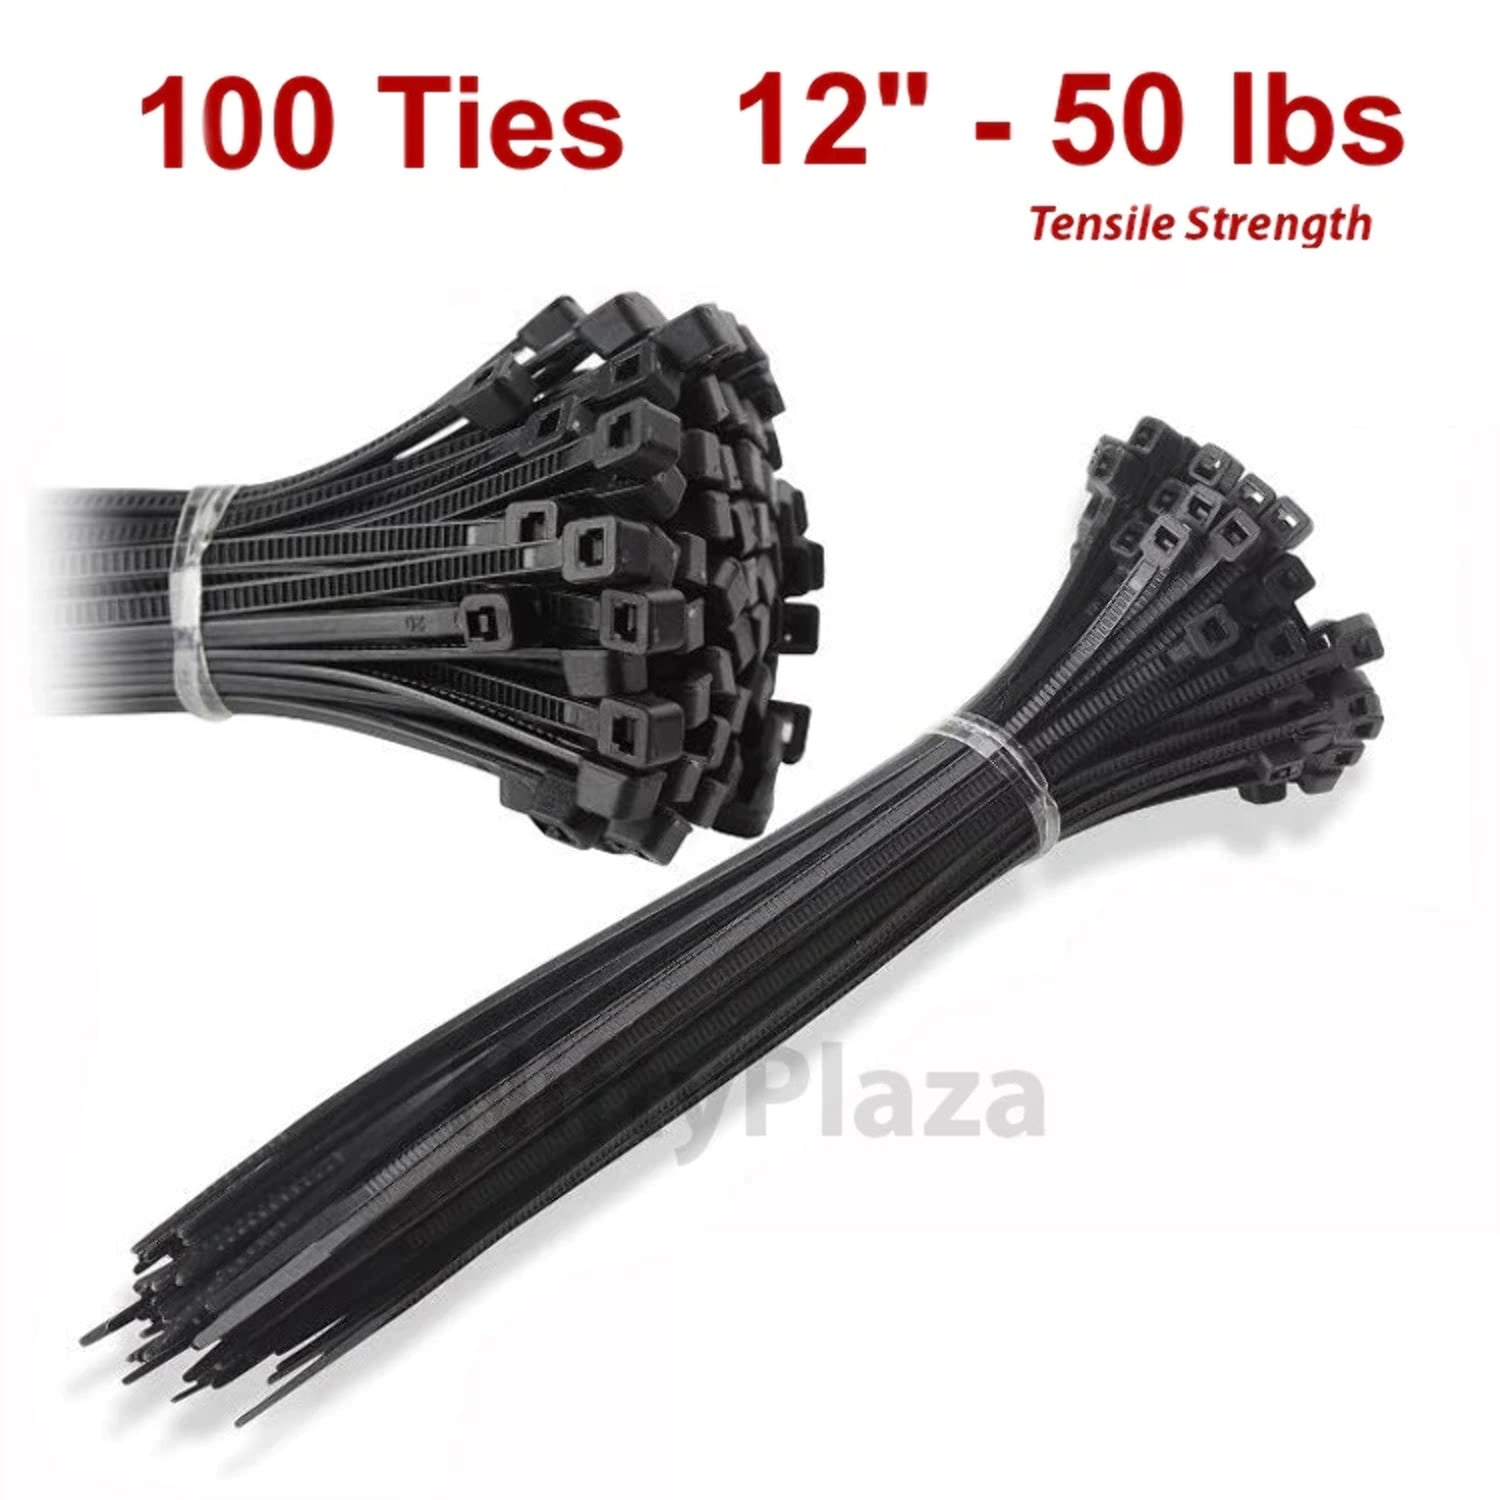 NiftyPlaza 12 Inch Cable Zip Ties, 50 lbs Tensile Strength Premium ...